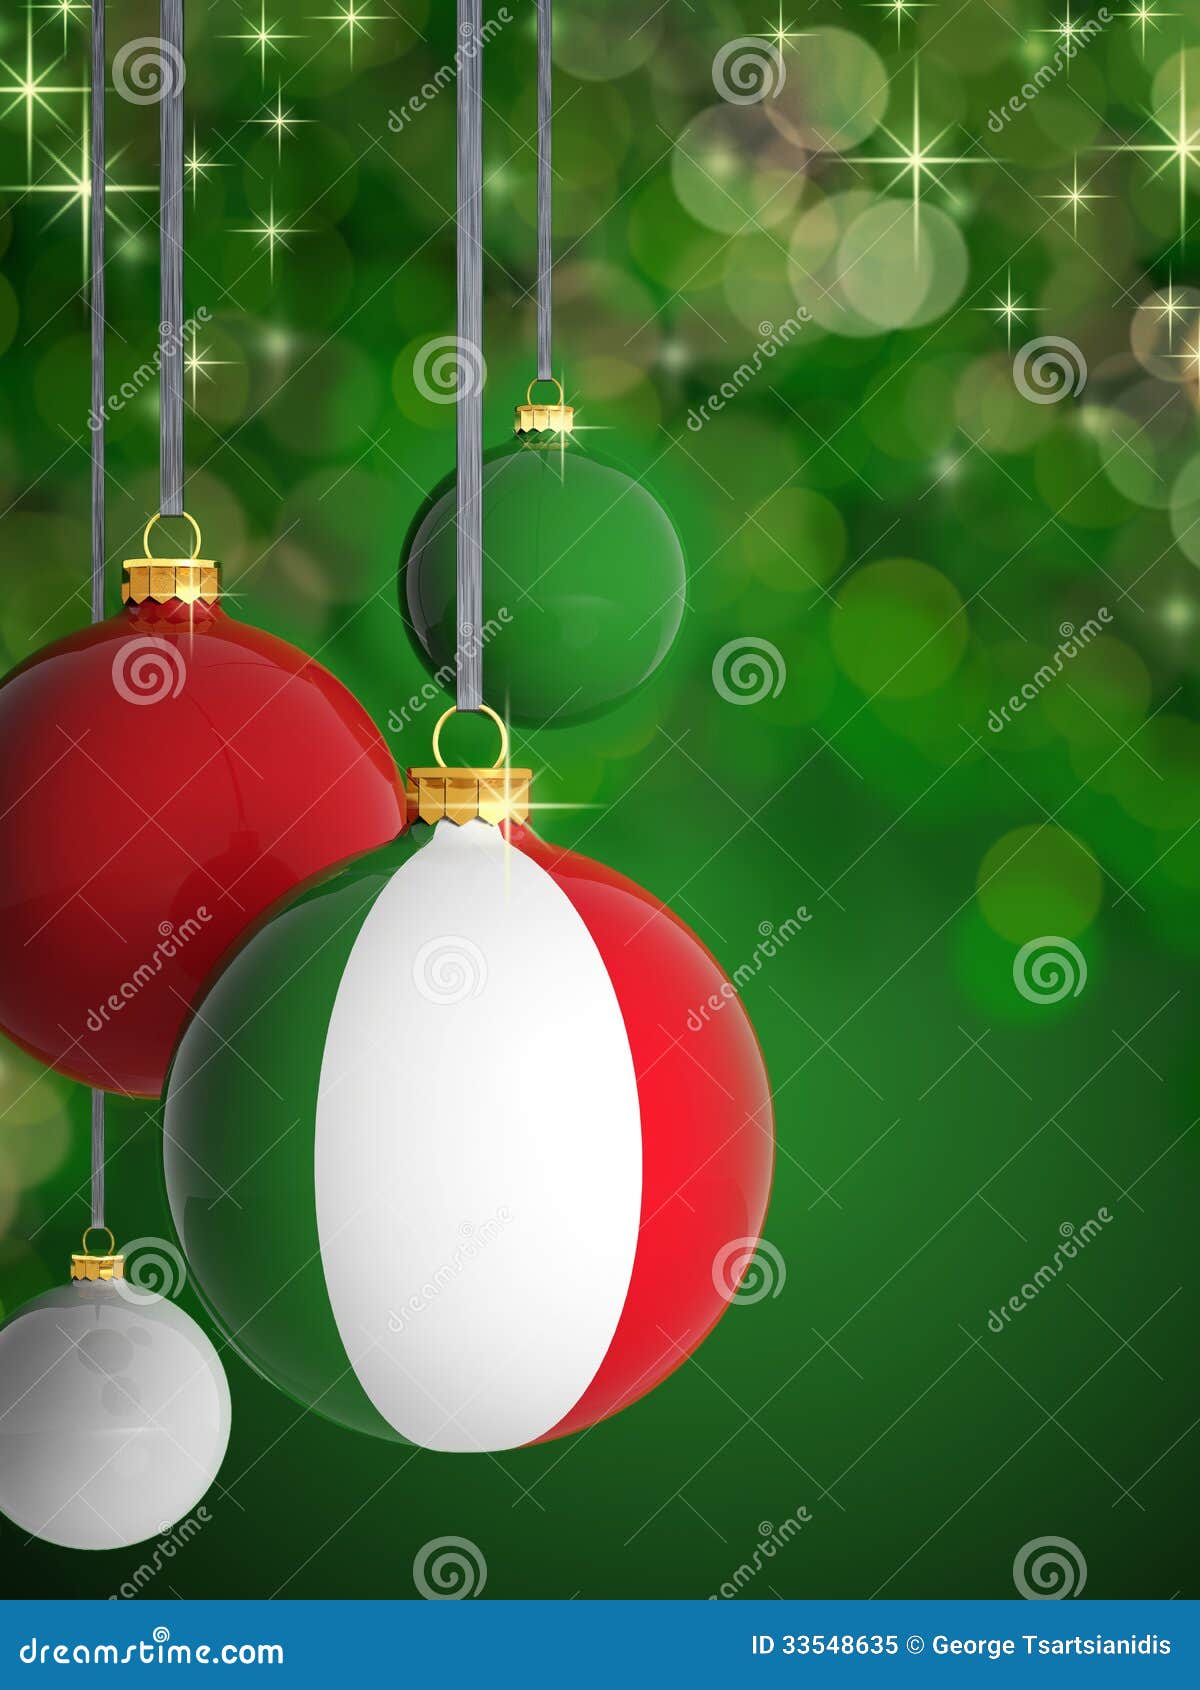 Christmas Balls With Italian Flag Royalty Free Stock Photo 